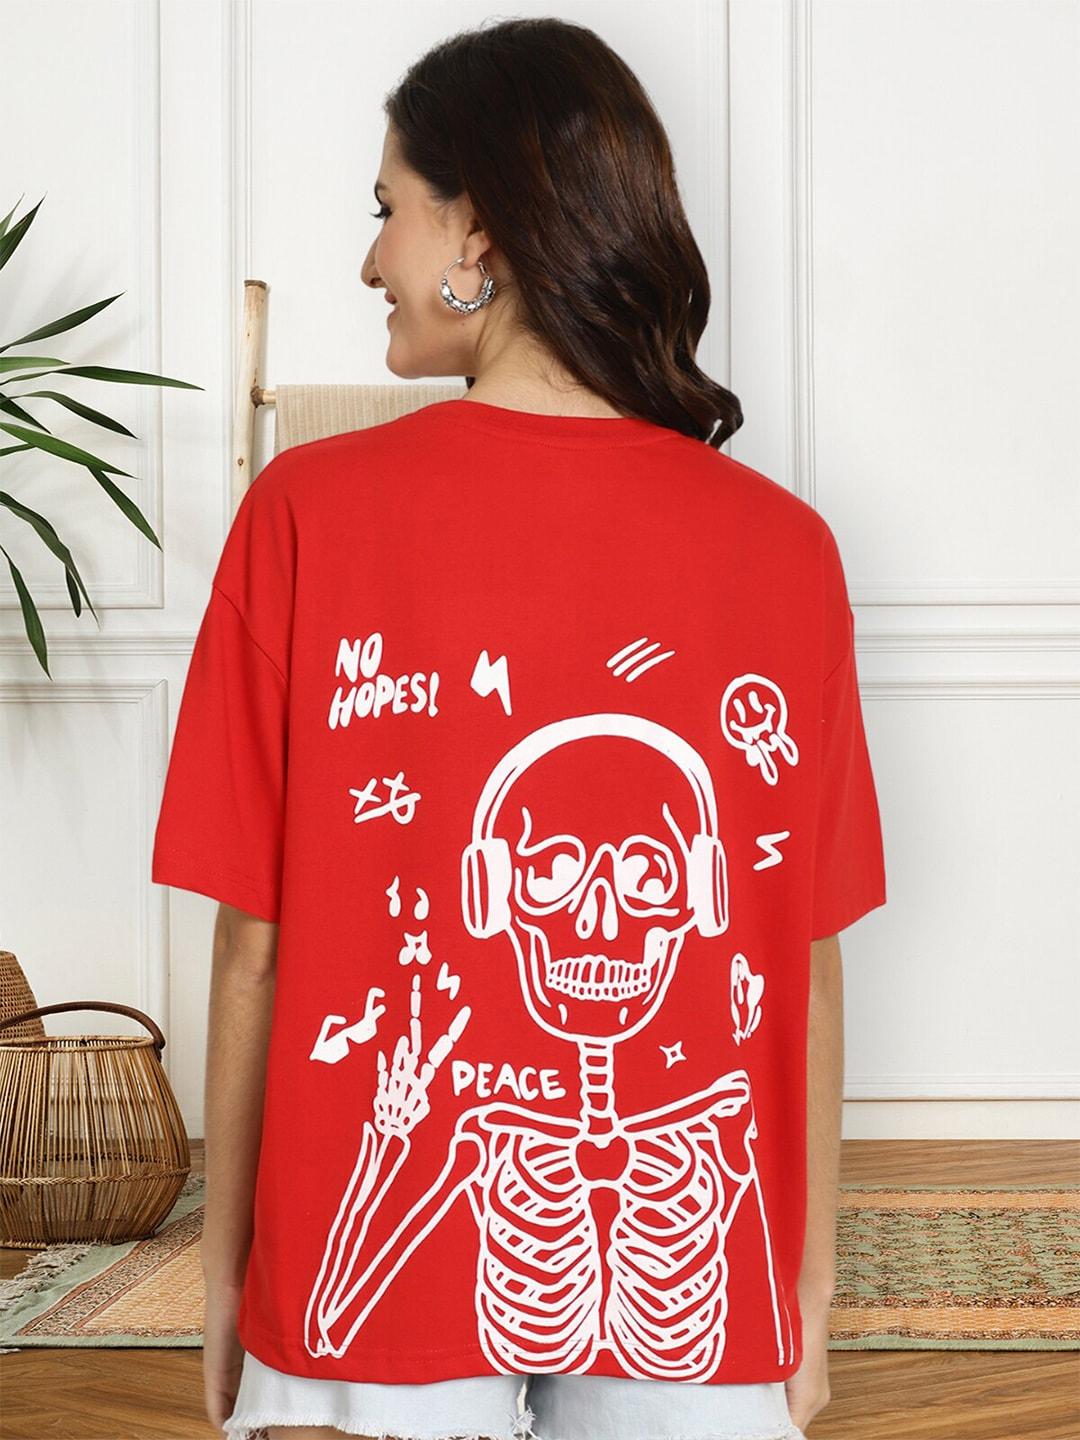 fabflee-women-typography-printed-t-shirt